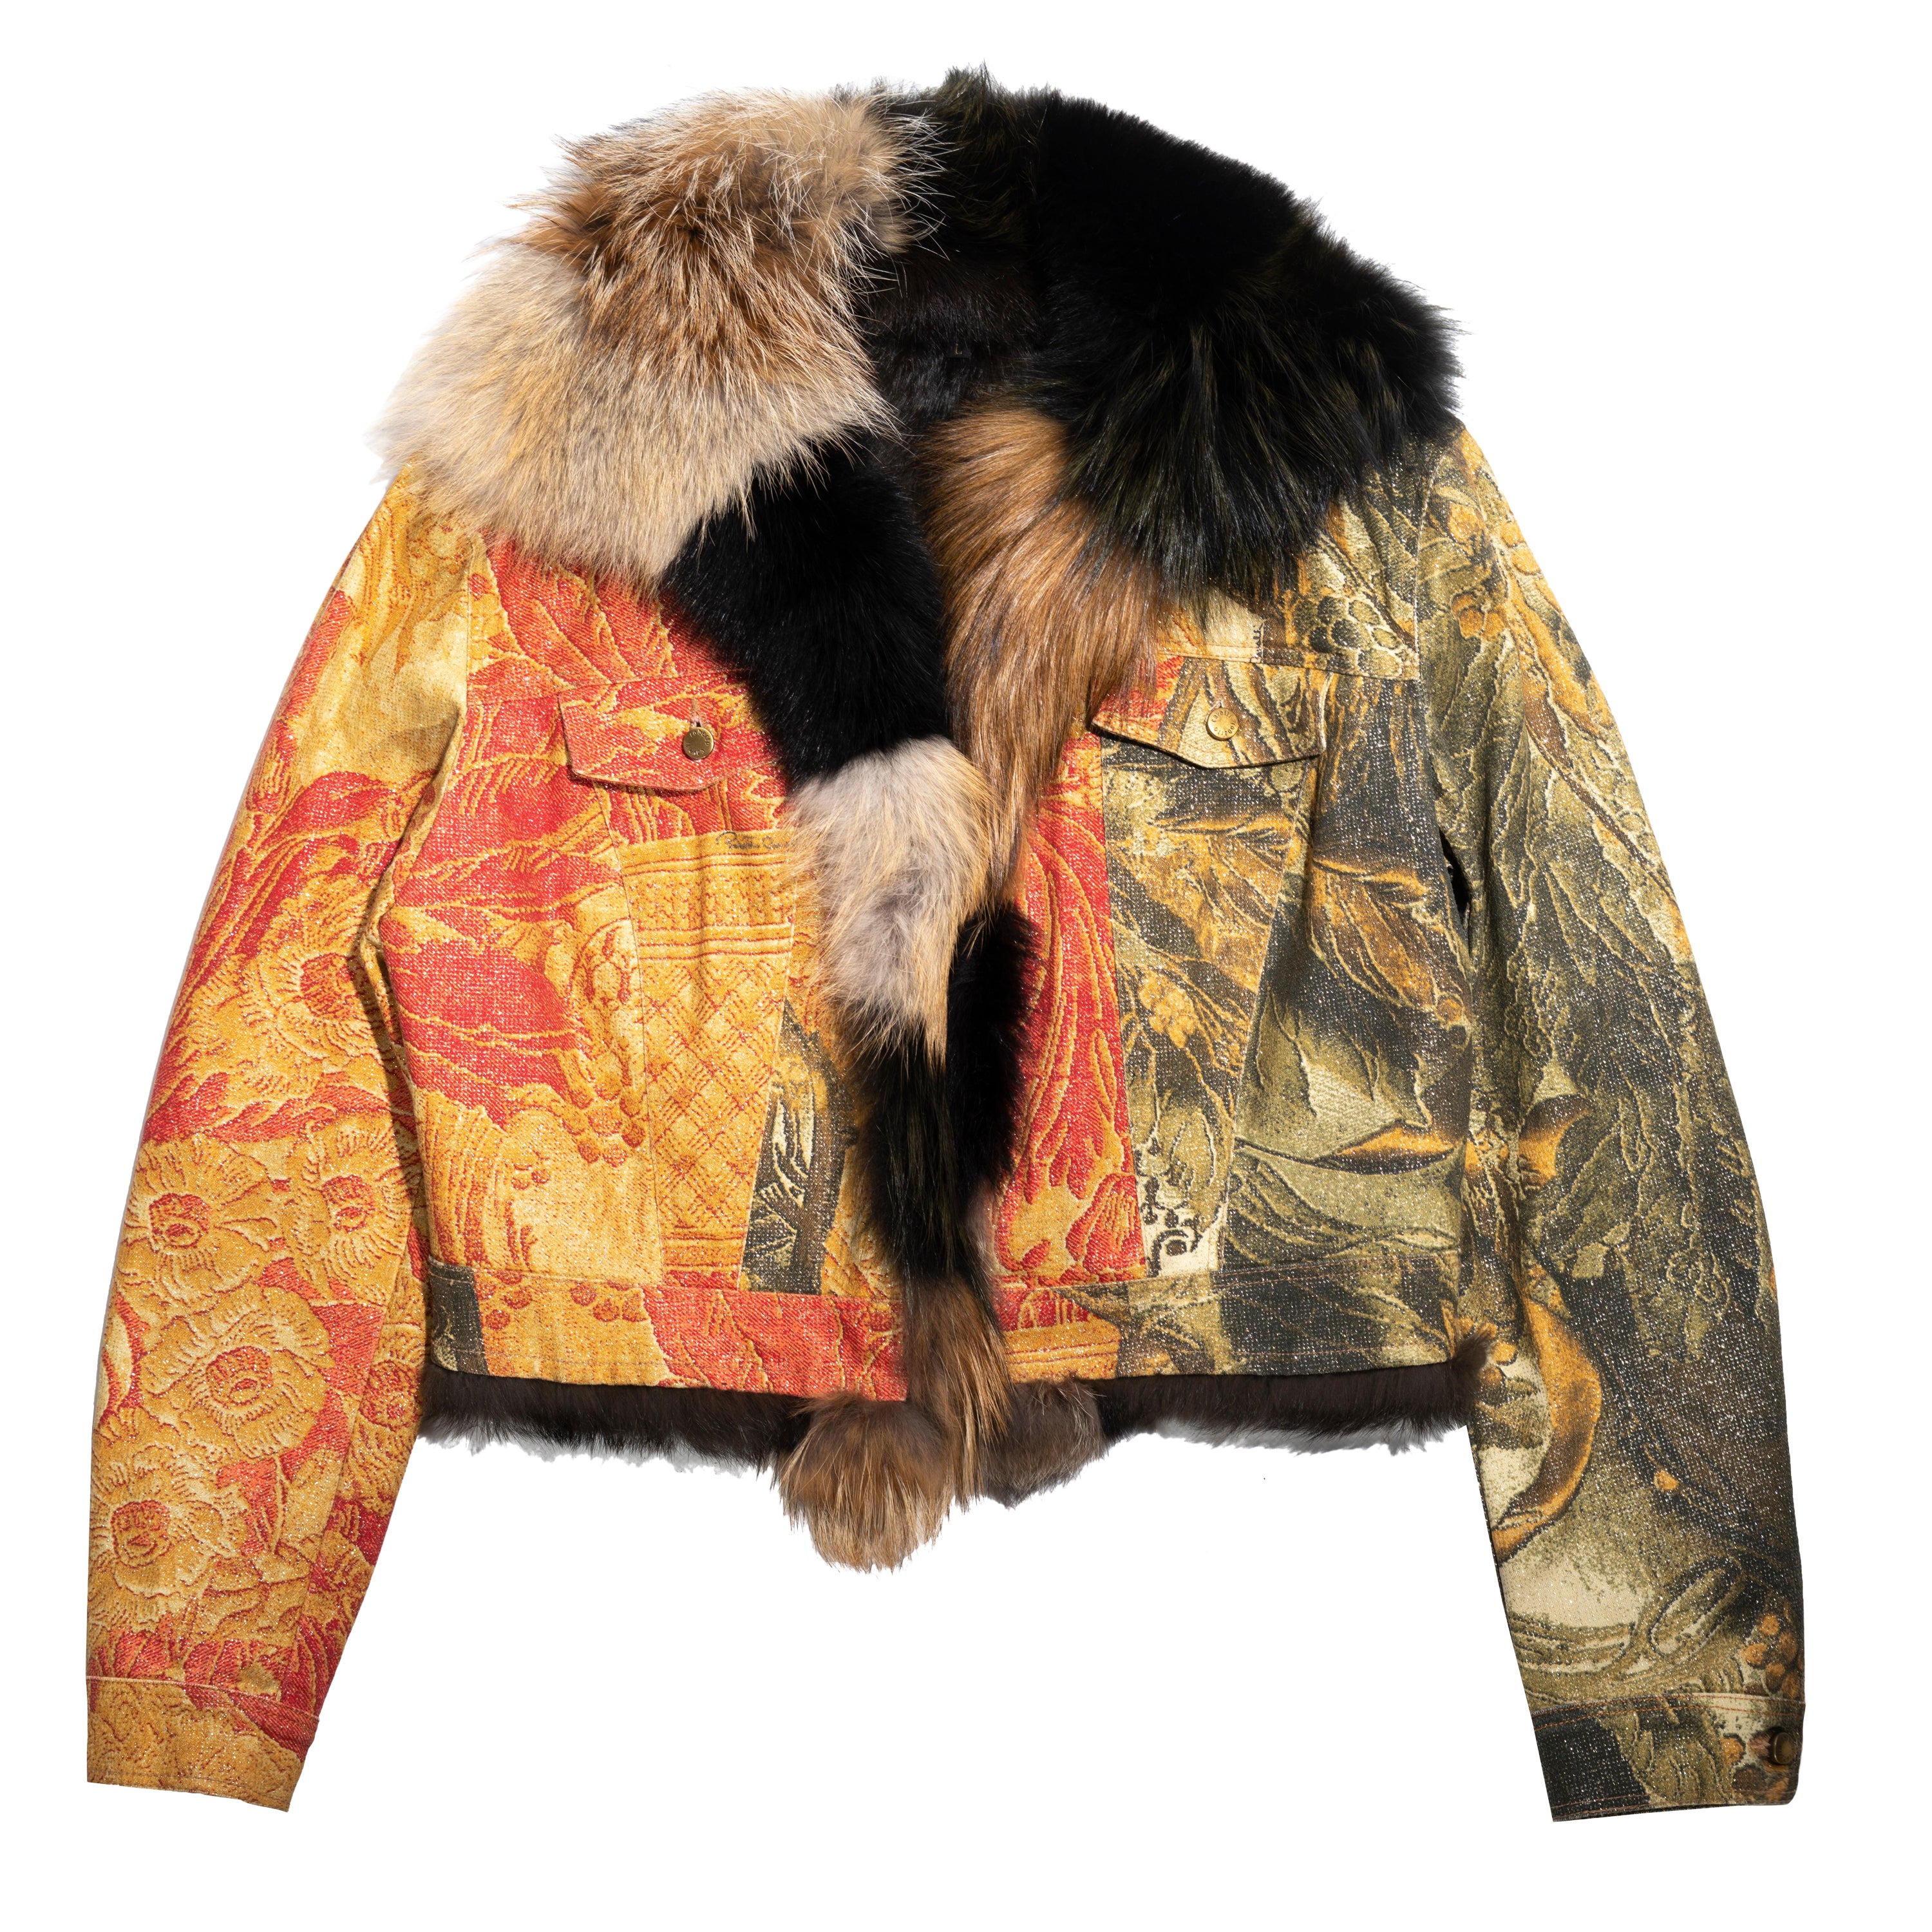 Roberto Cavalli printed denim jacket with fur, fw 2001